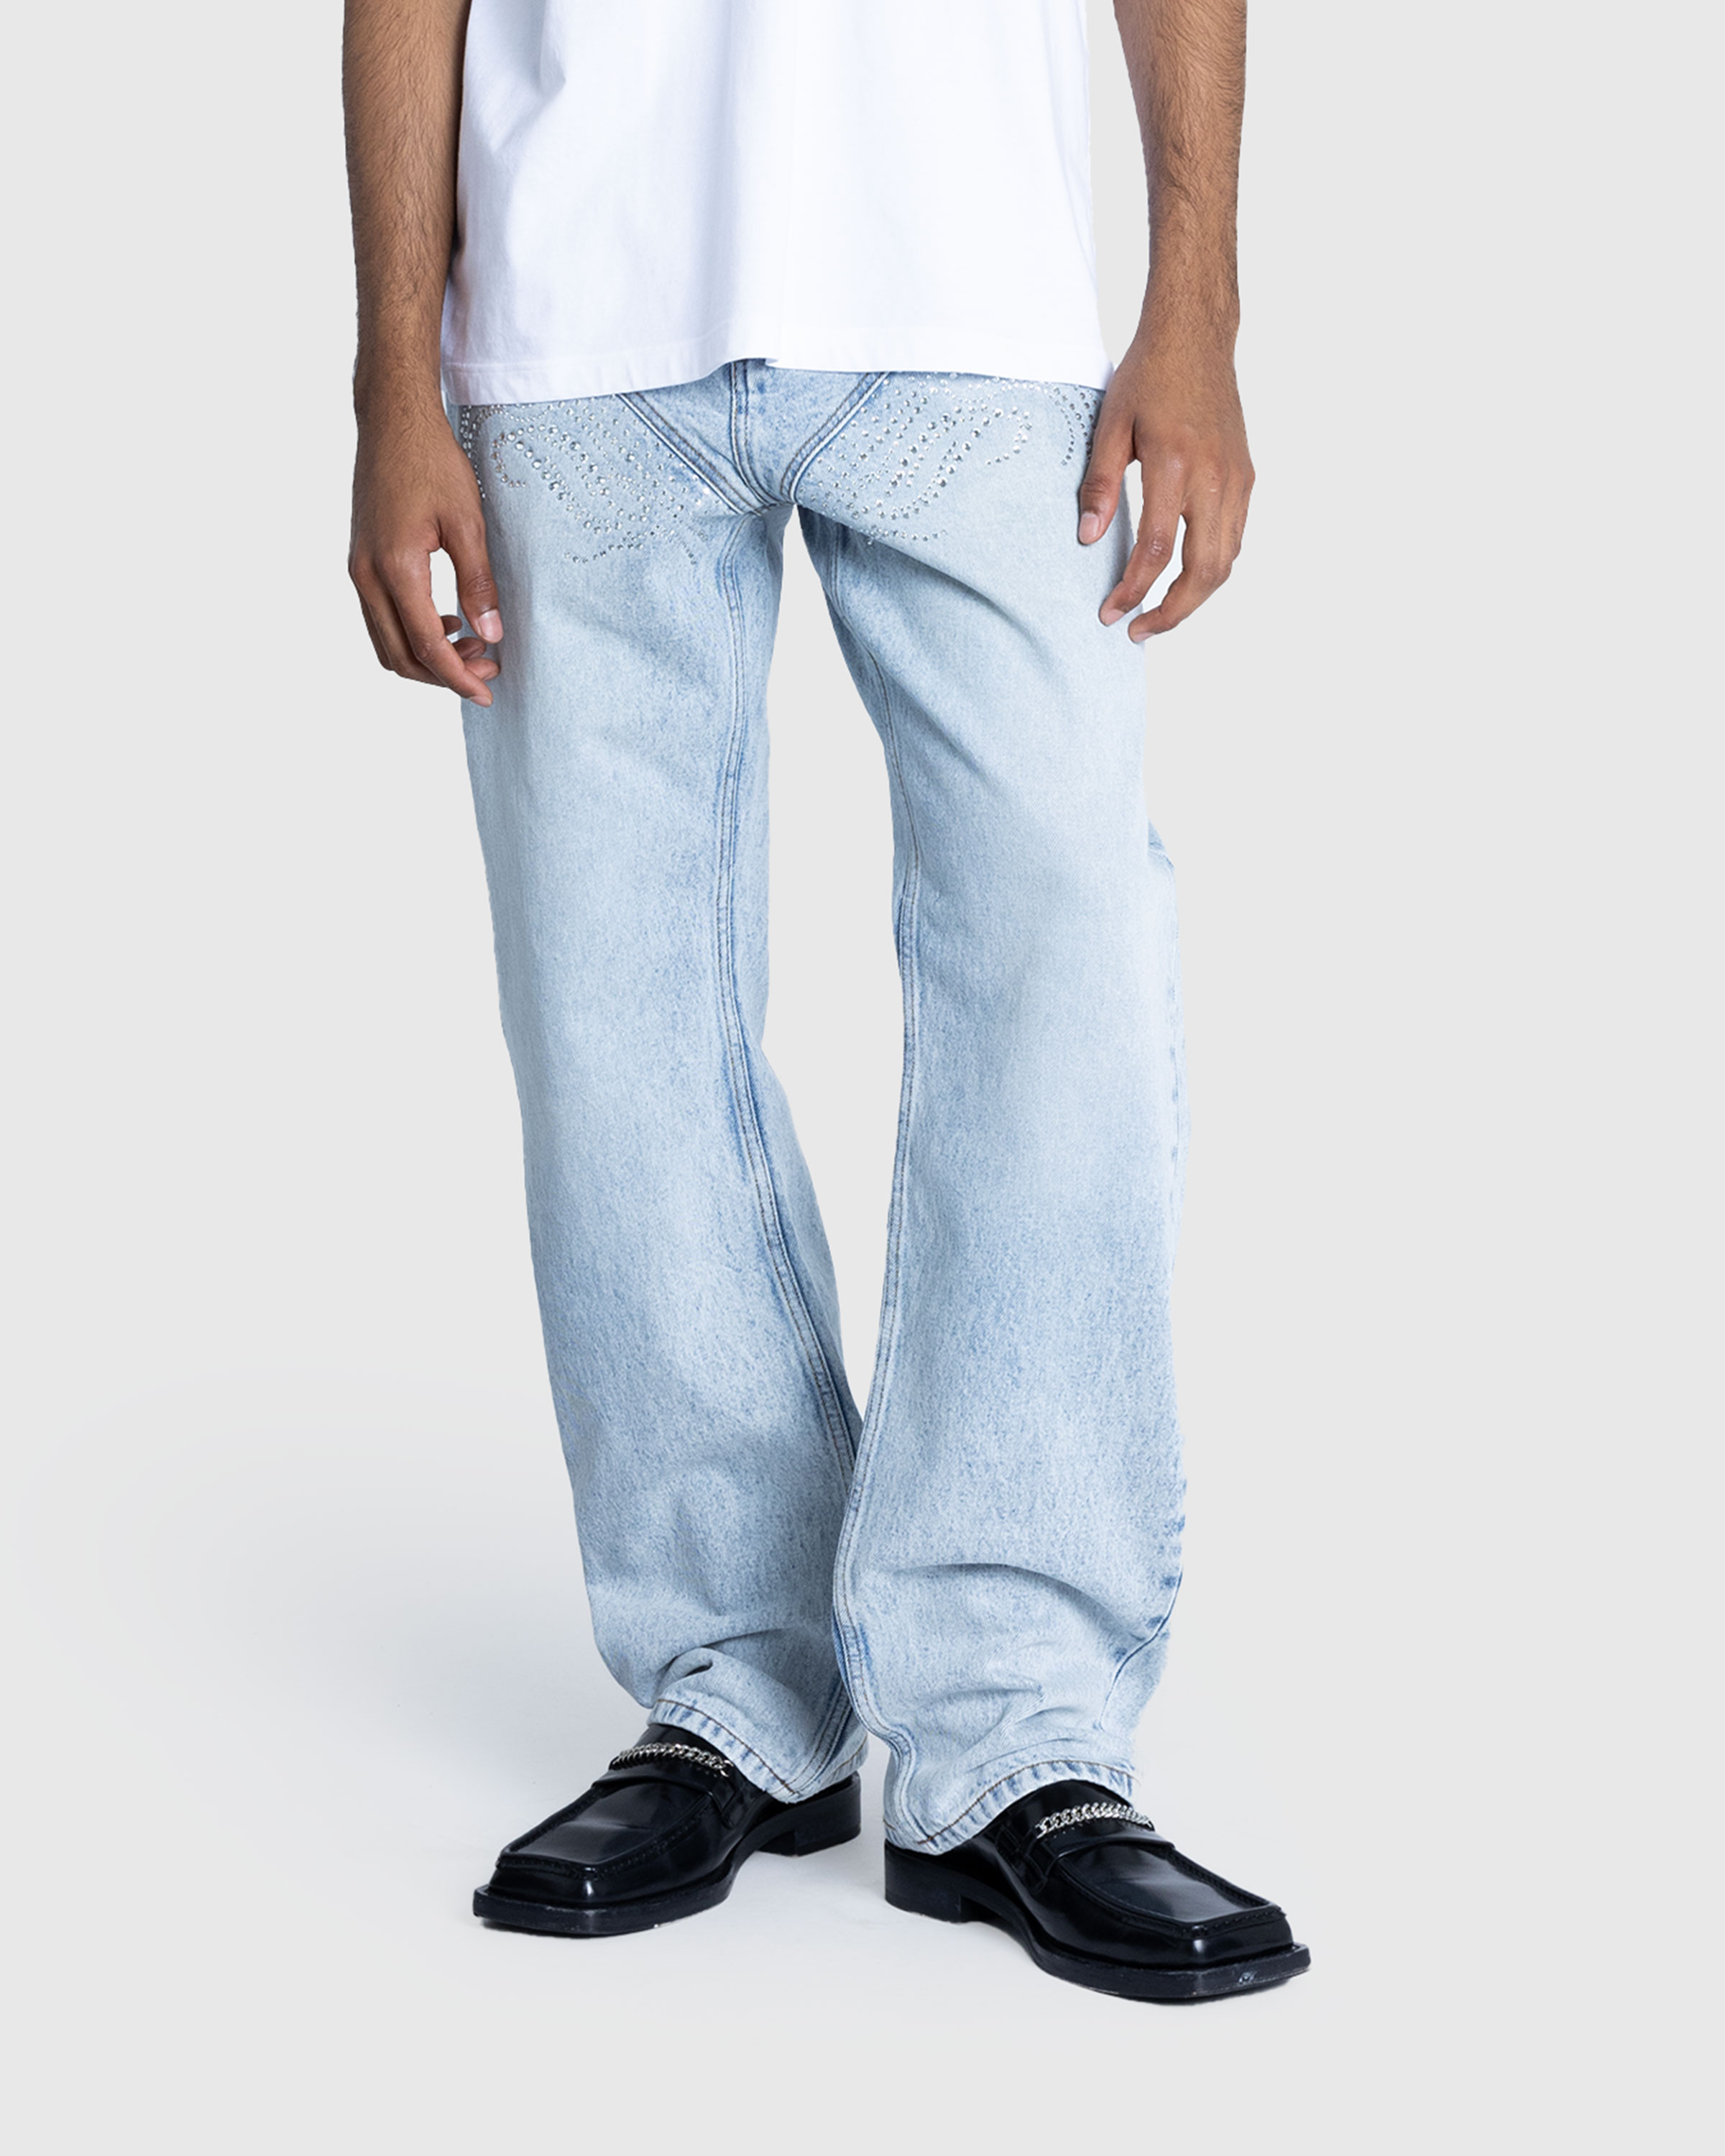 Y/Project – Rhinestone Jeans Blue - Denim - Blue - Image 2